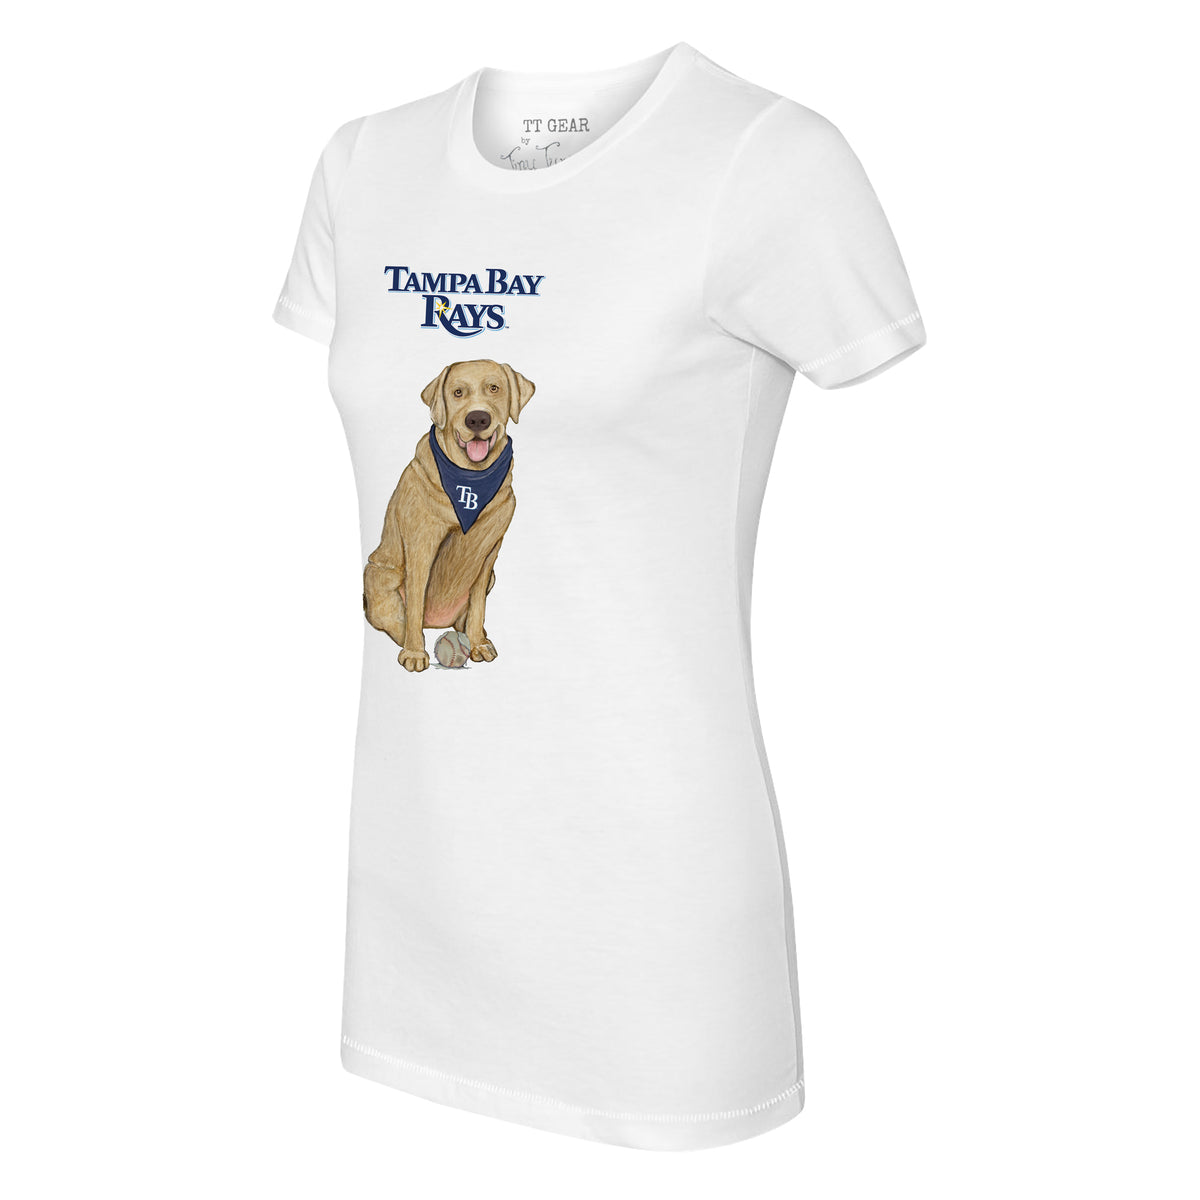 Tampa Bay Rays Yellow Labrador Retriever Tee Shirt